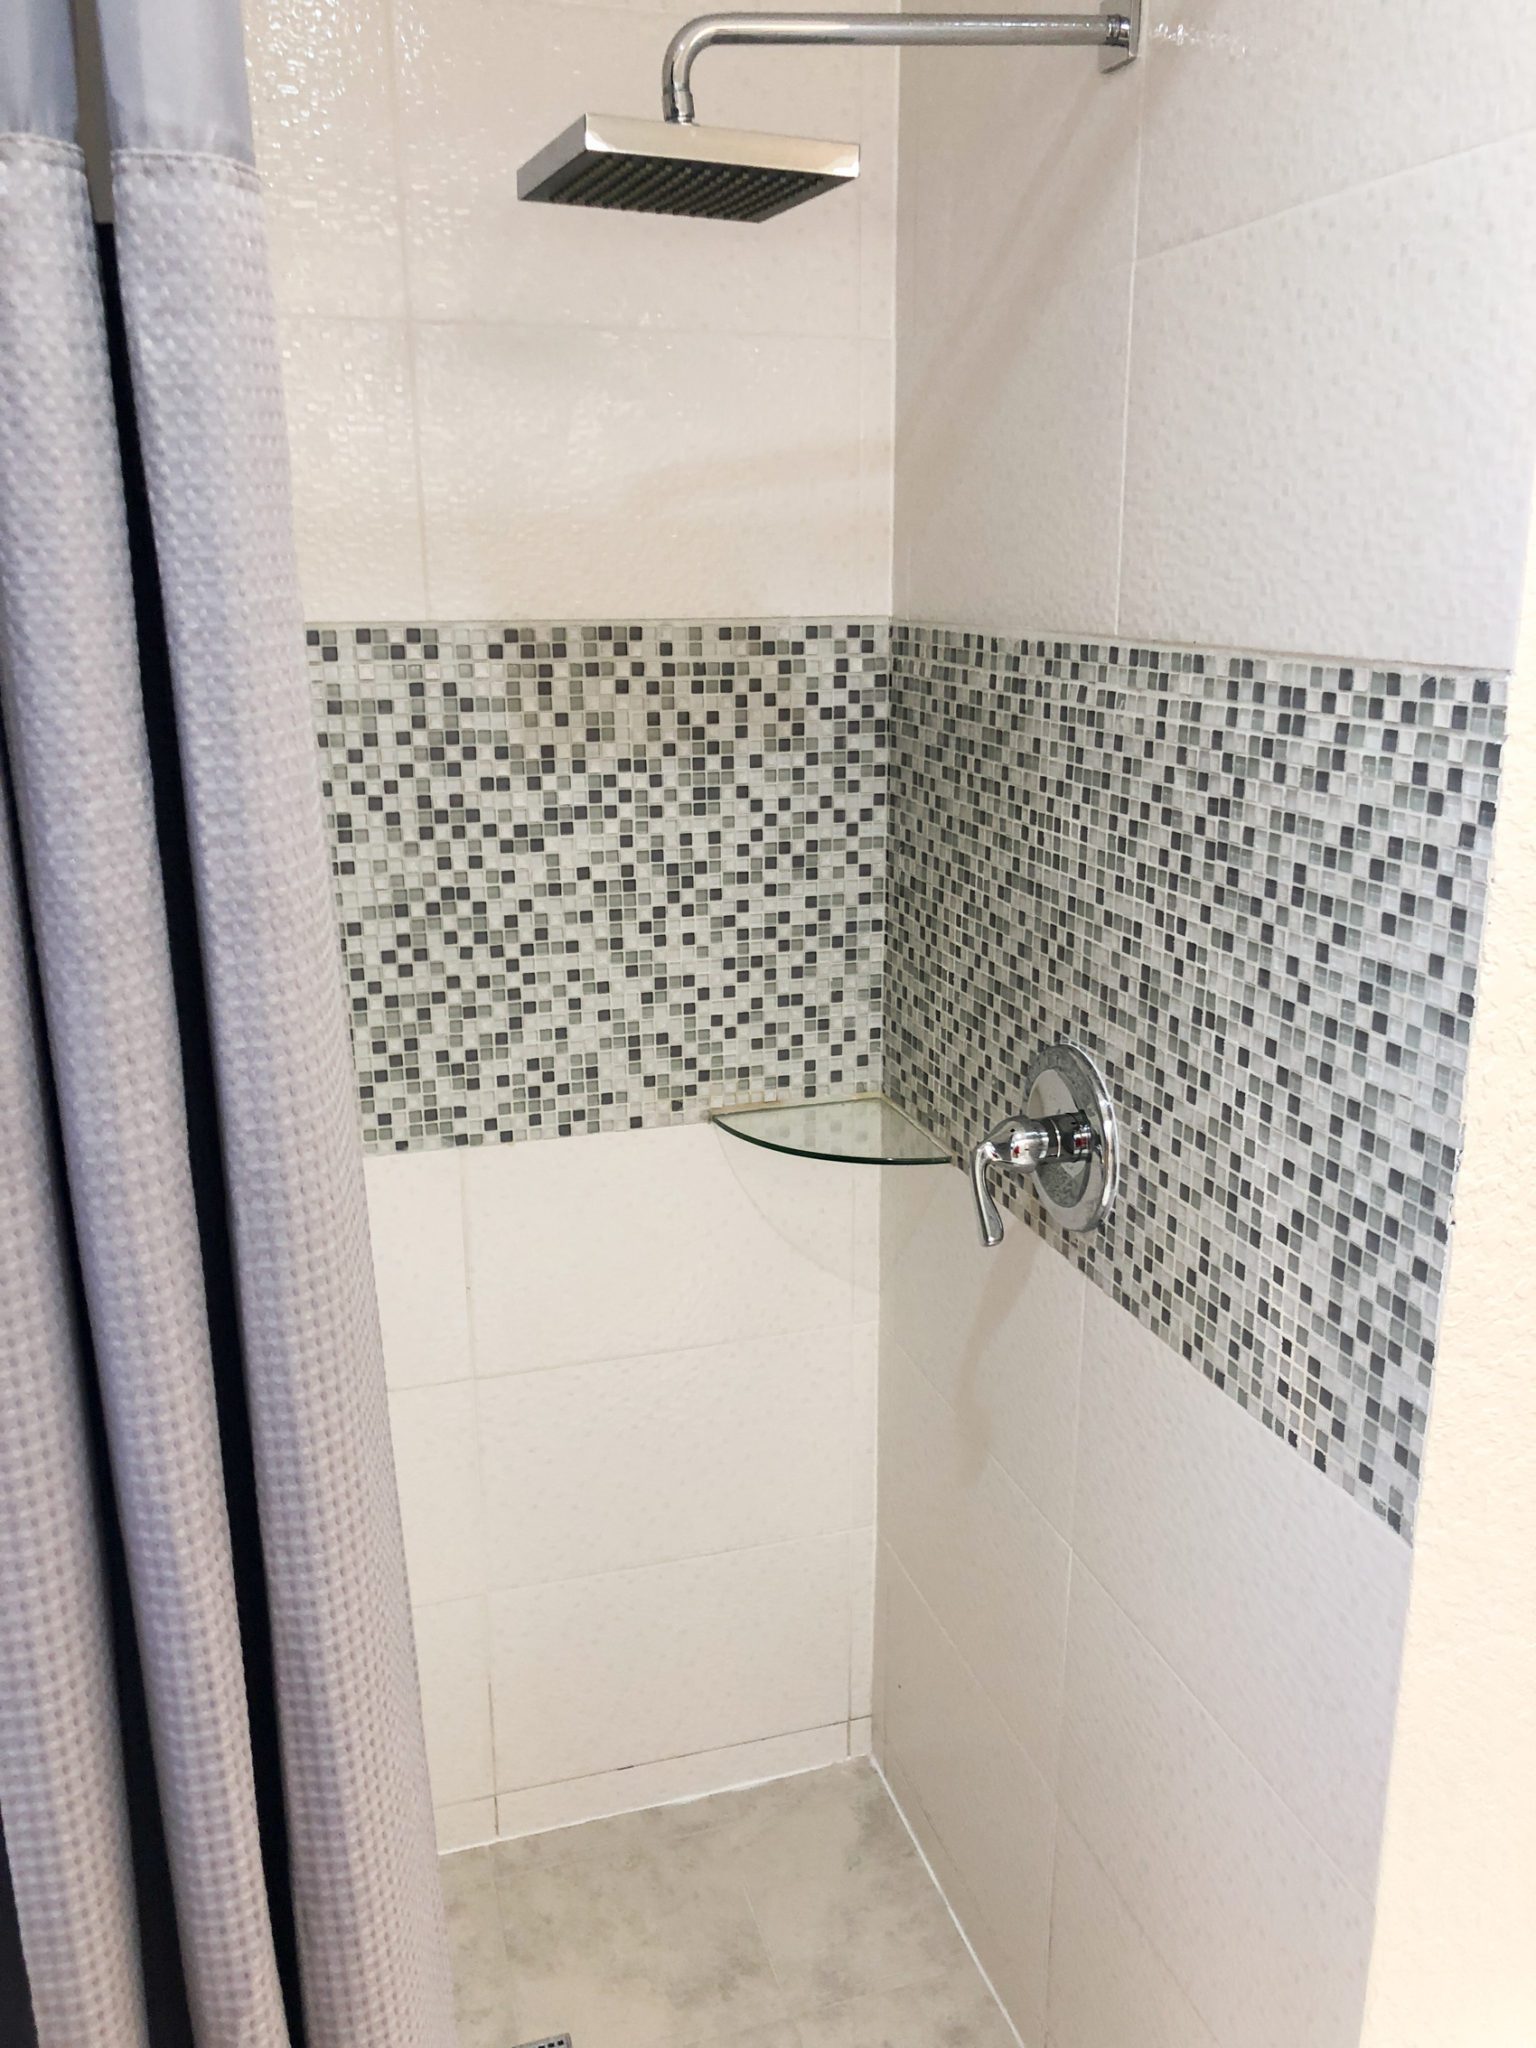 new shower for Guest Bathroom Remodel Inspiration